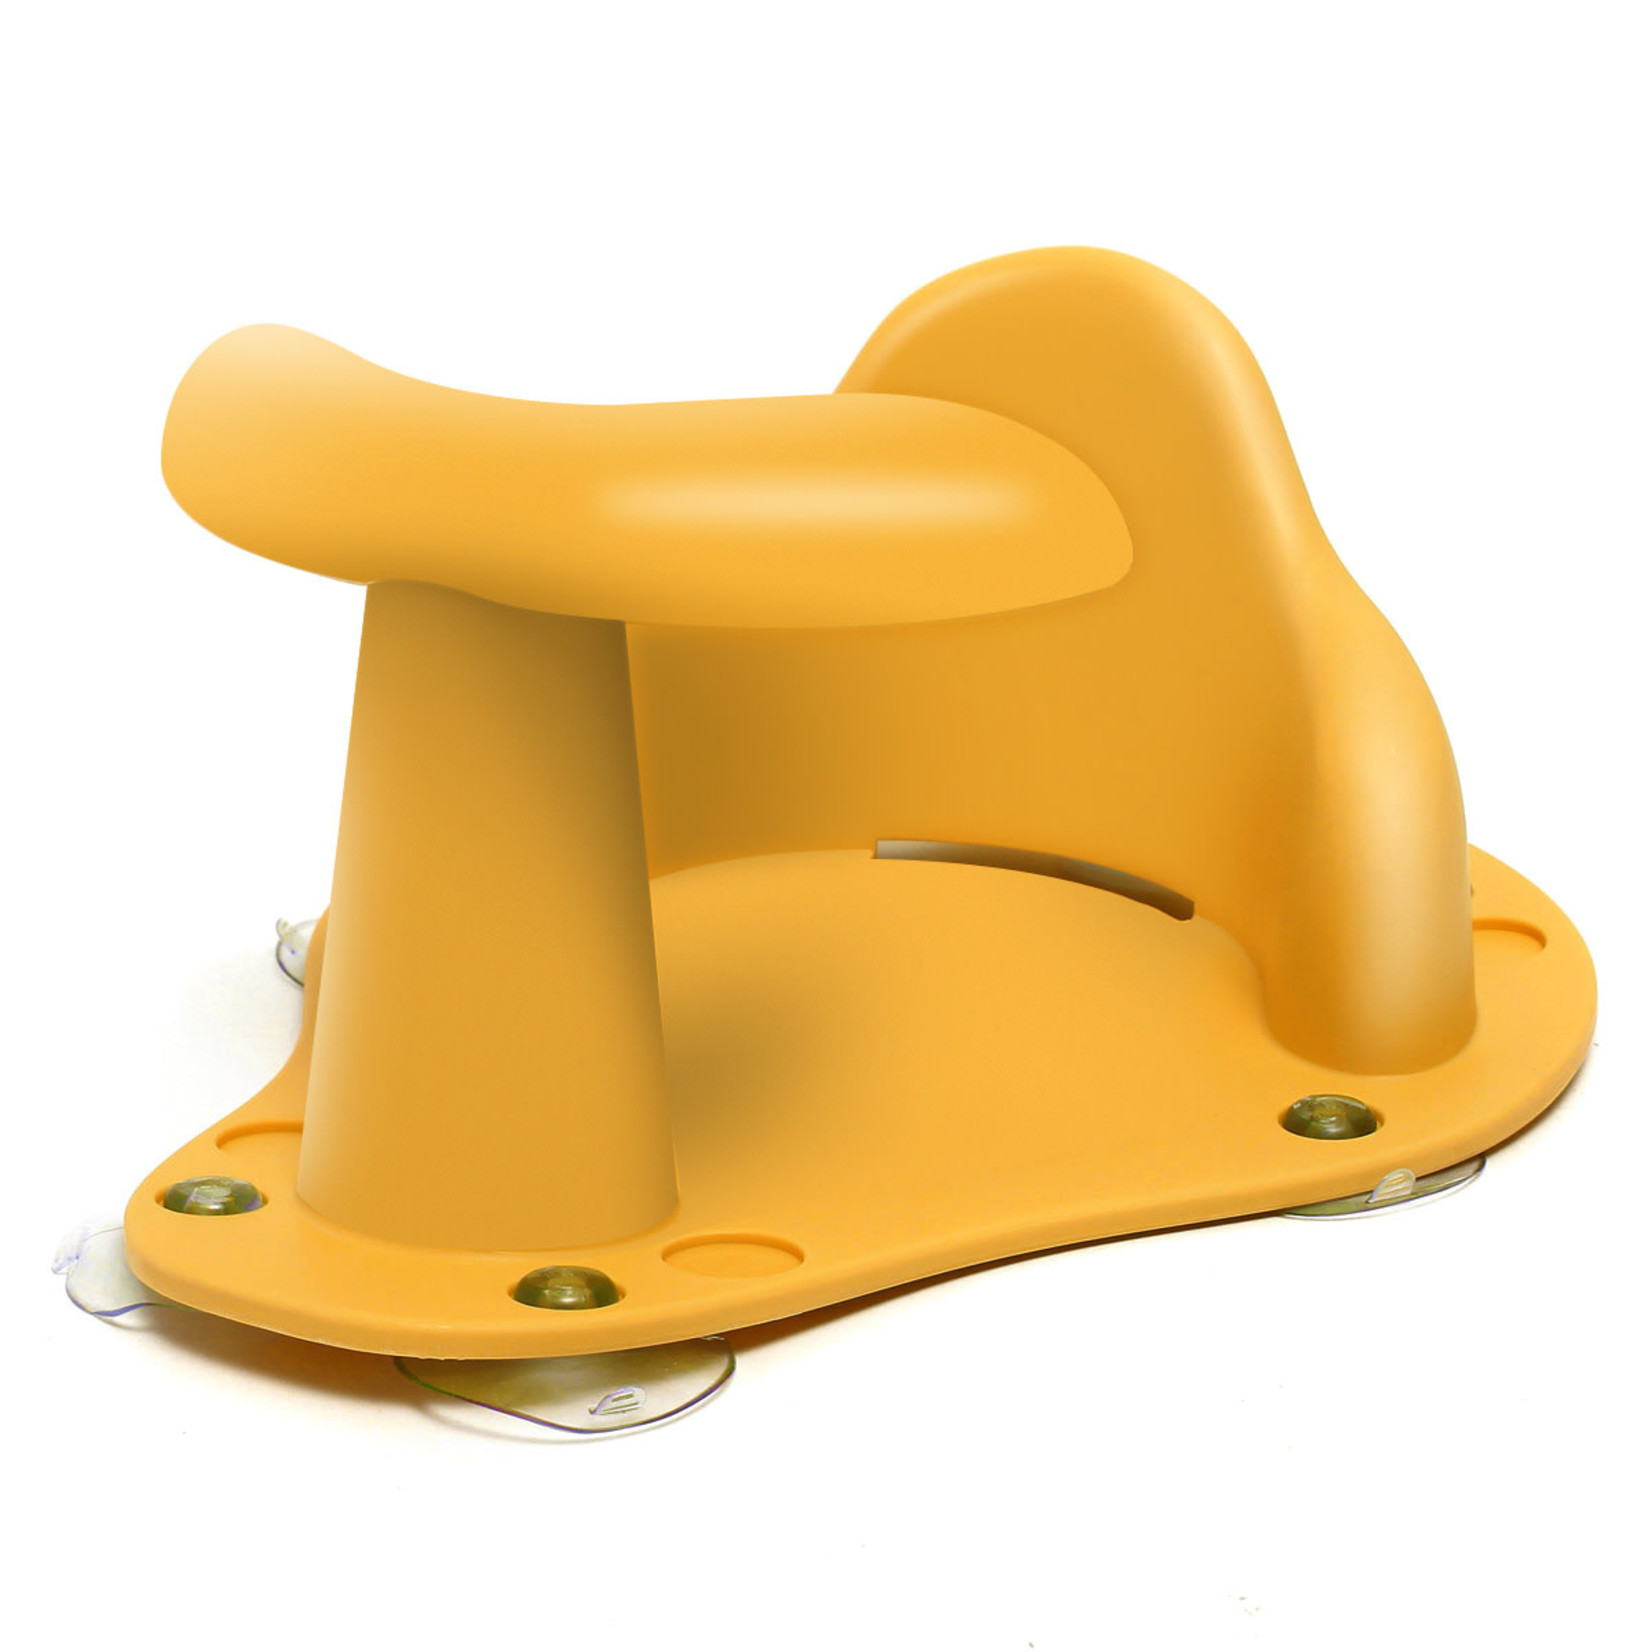 Uenjoy Yellow Baby Bath Seat/Chair